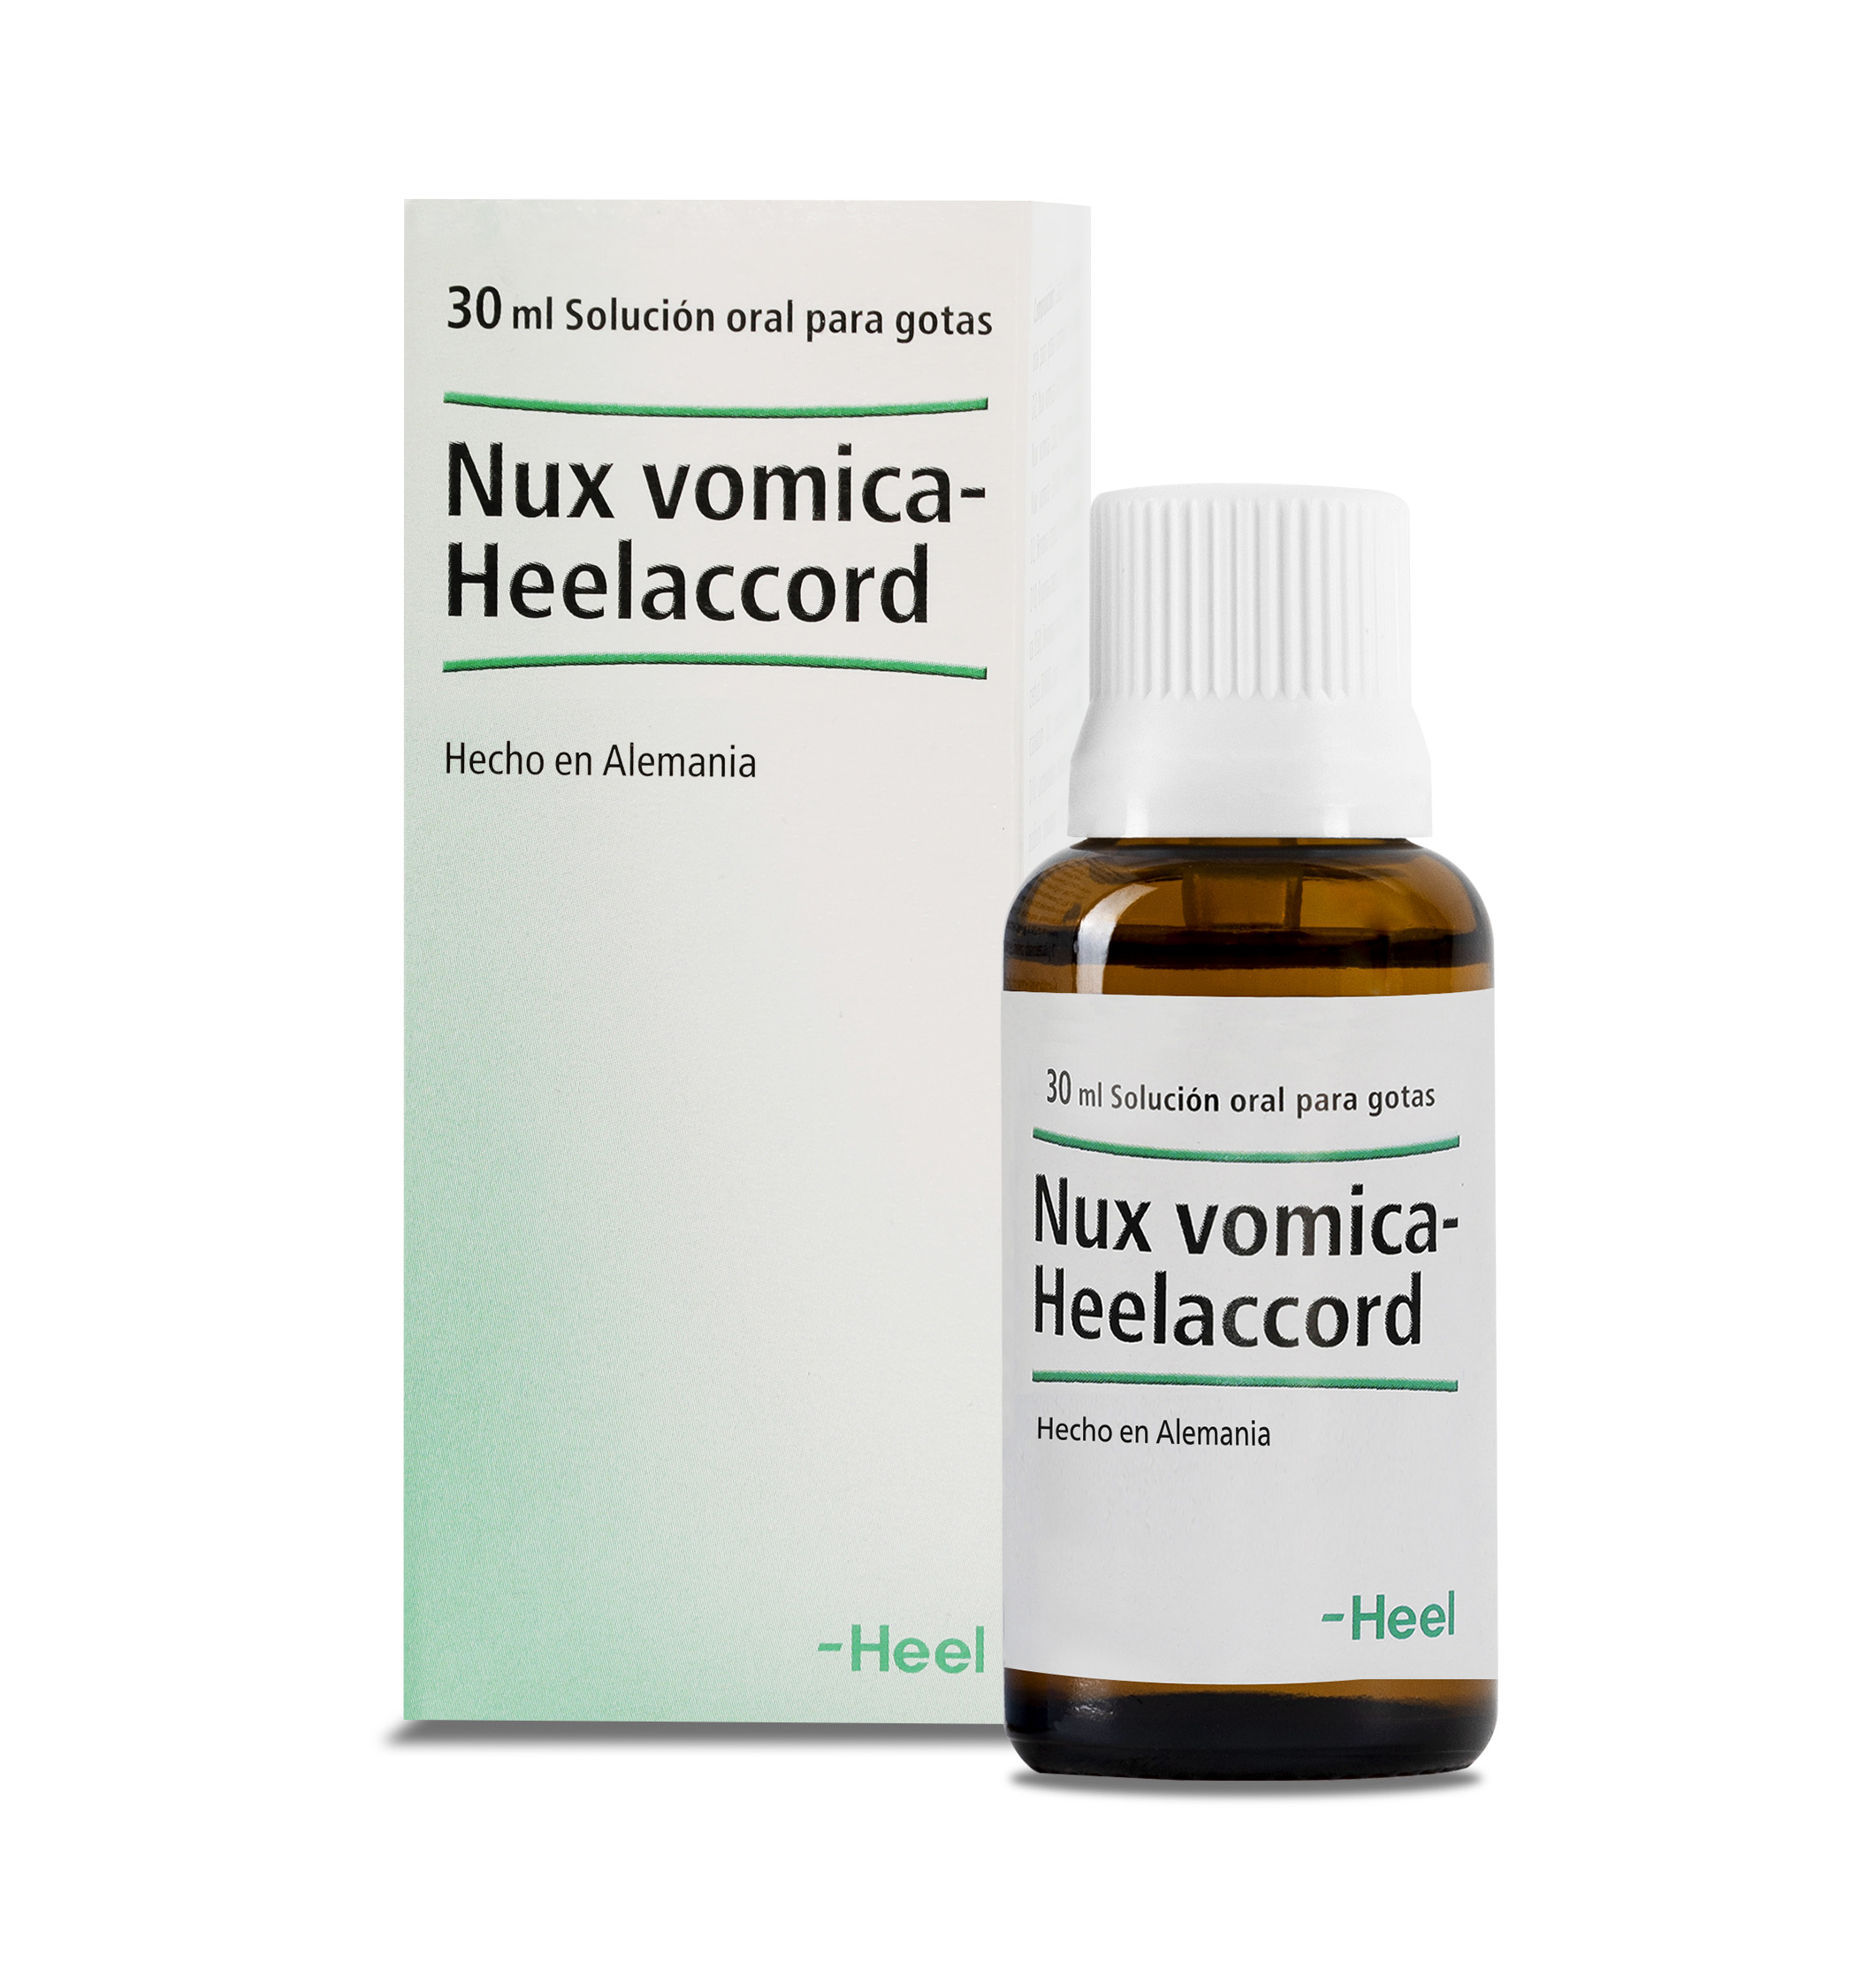 Nux vomica-Heelaccord® Gotas